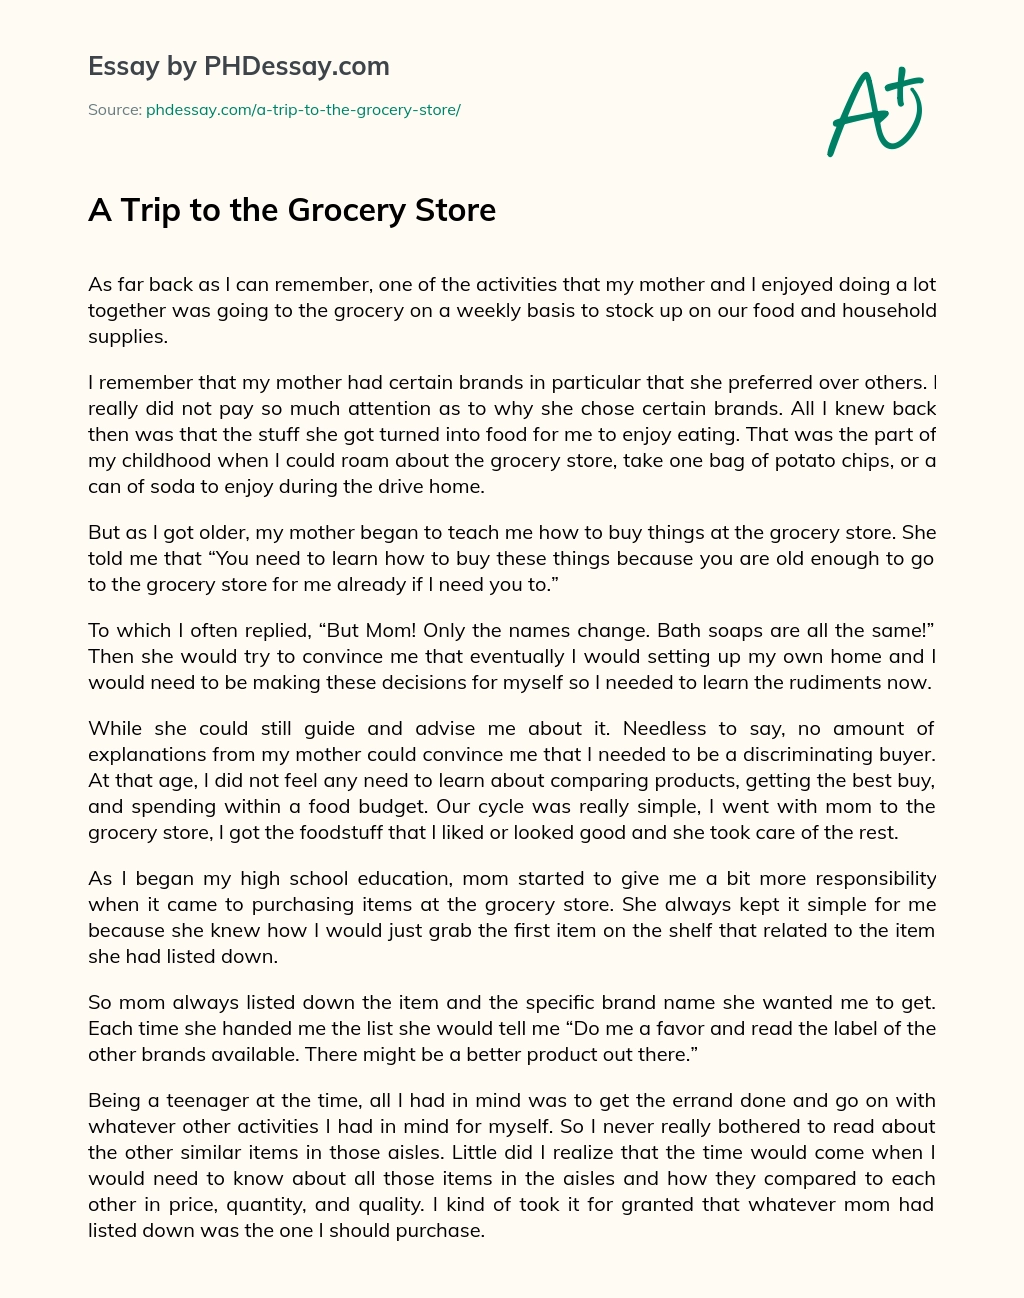 a recent shopping trip essay 120 words